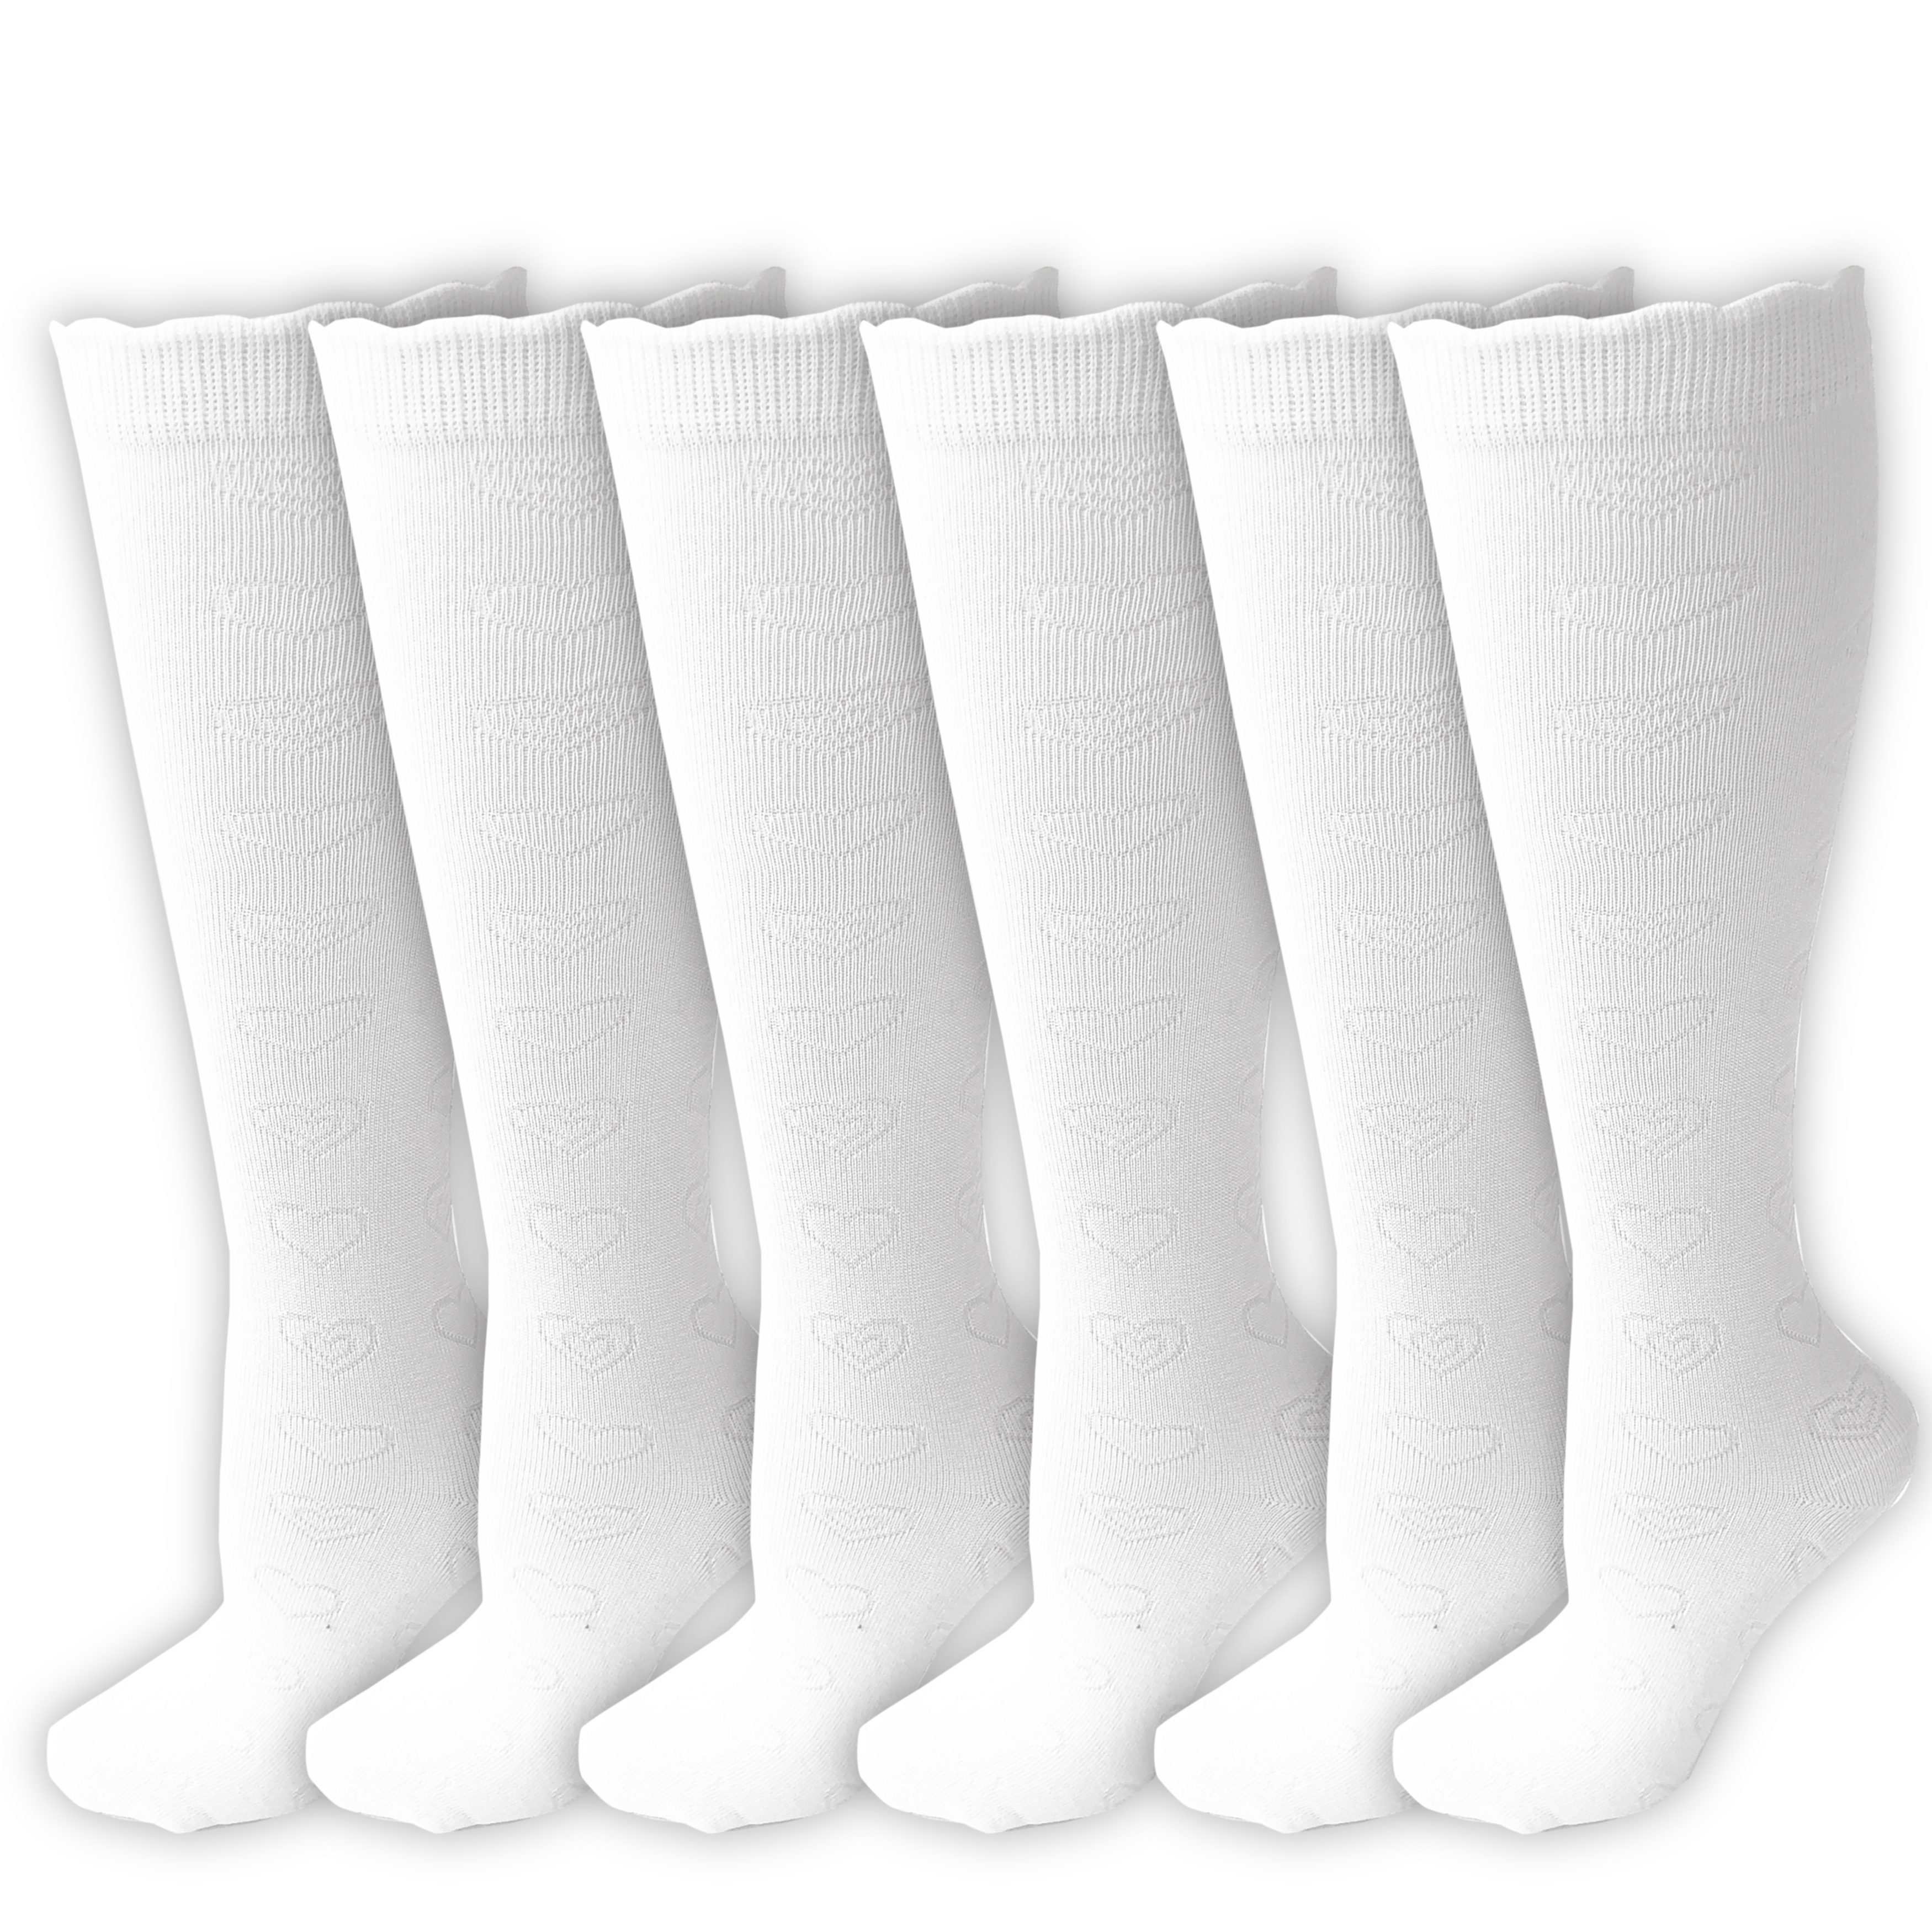 6 X Pairs of Children Kids Girls Cotton Rich Long Plain Knee High School Socks 